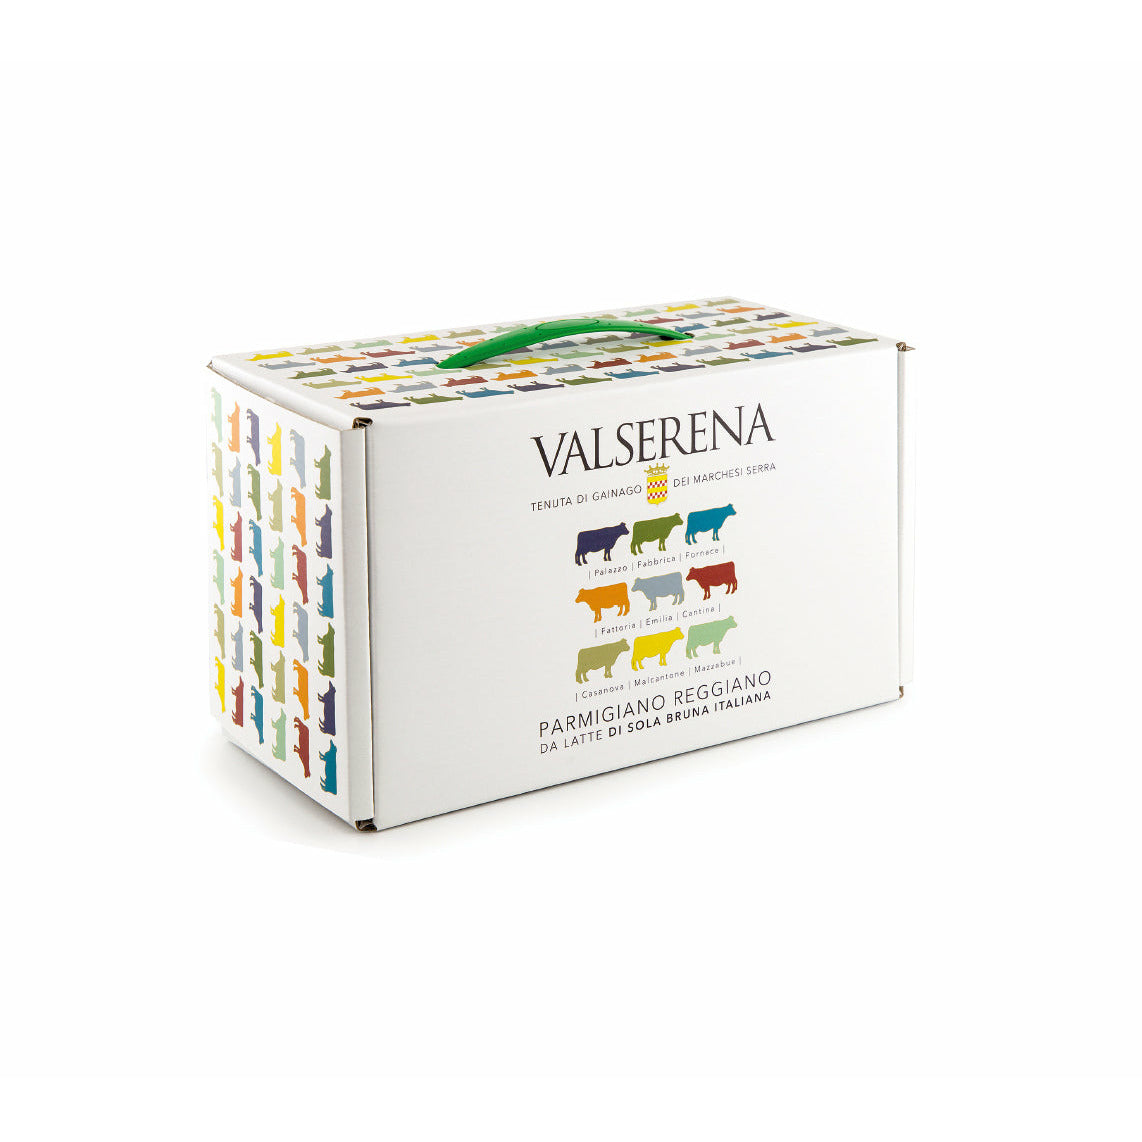 Packagings - scatola regalo quadra by divino marketing - Italian Wine Shop  - Saper bere bene